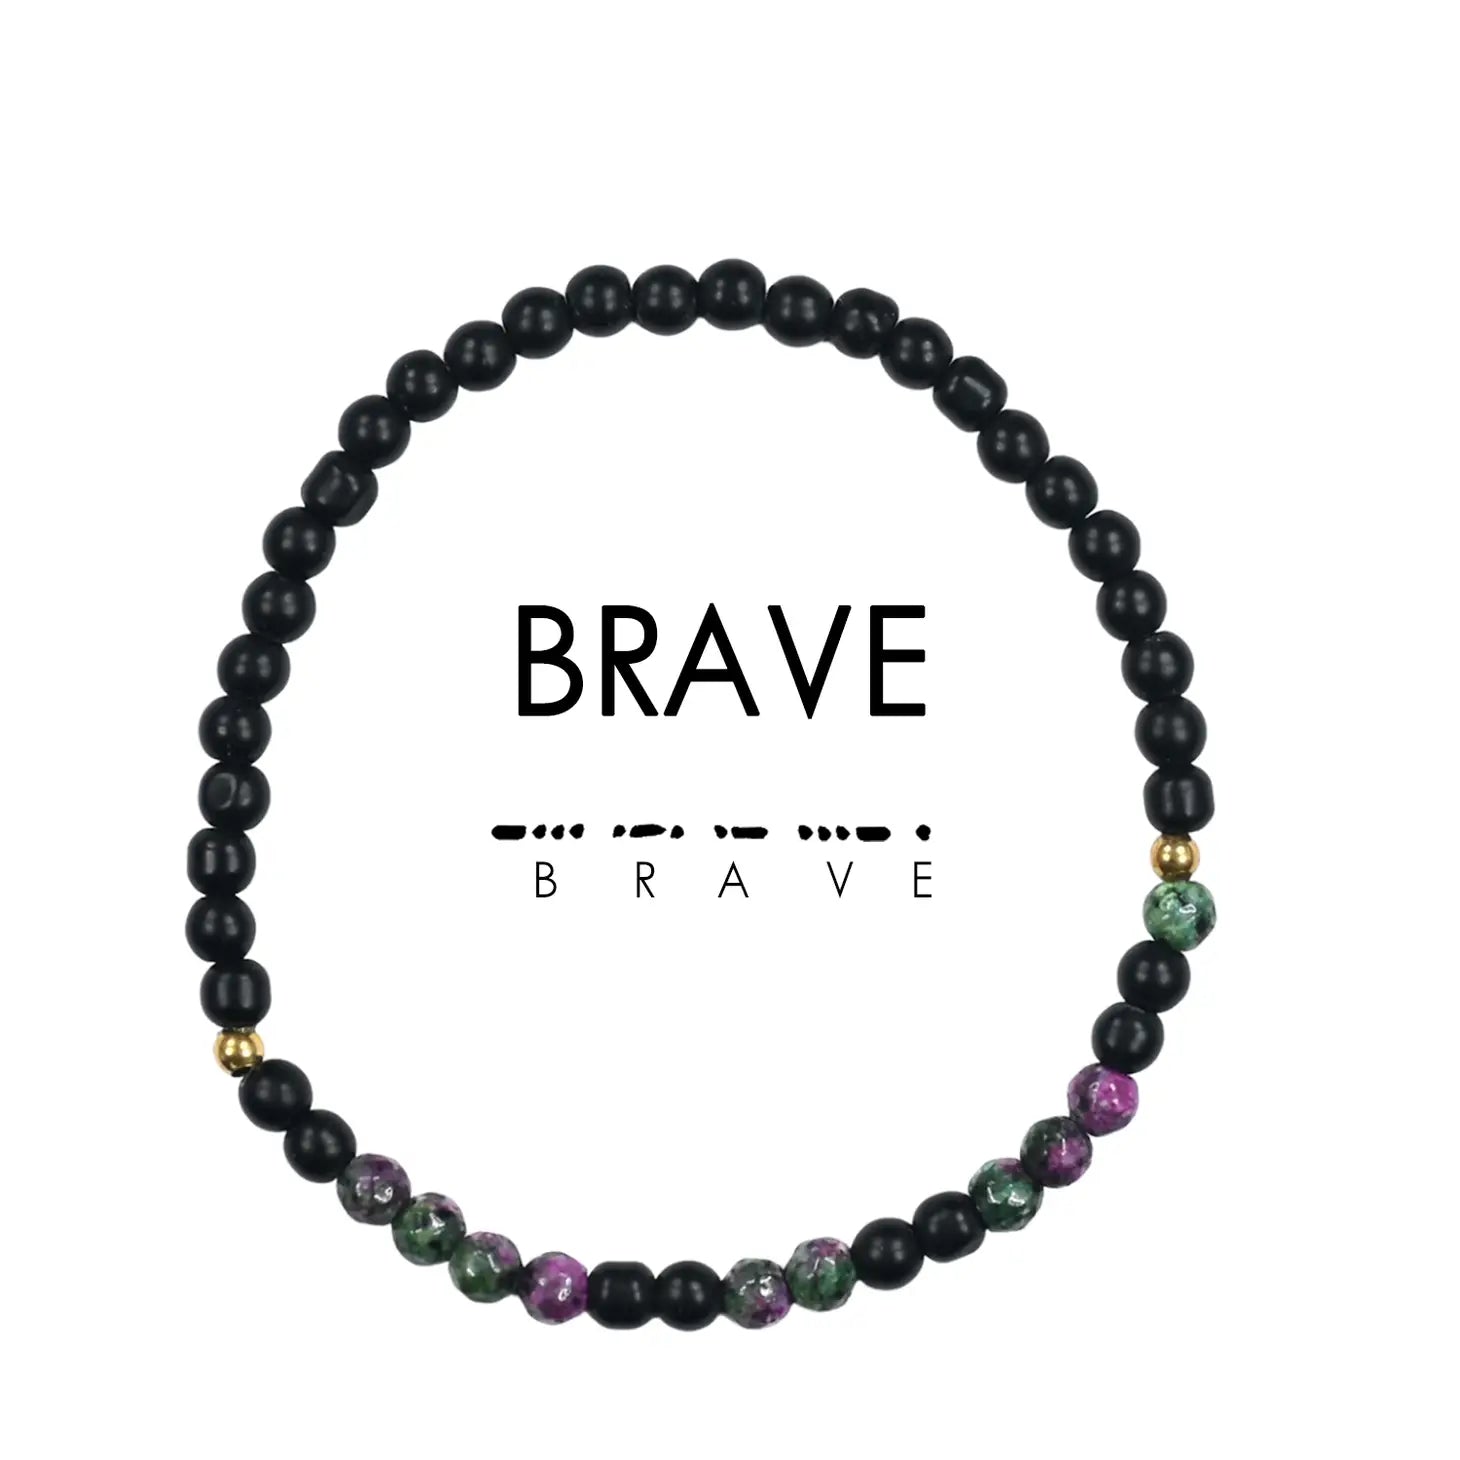 Morse Code Bracelet - Brave